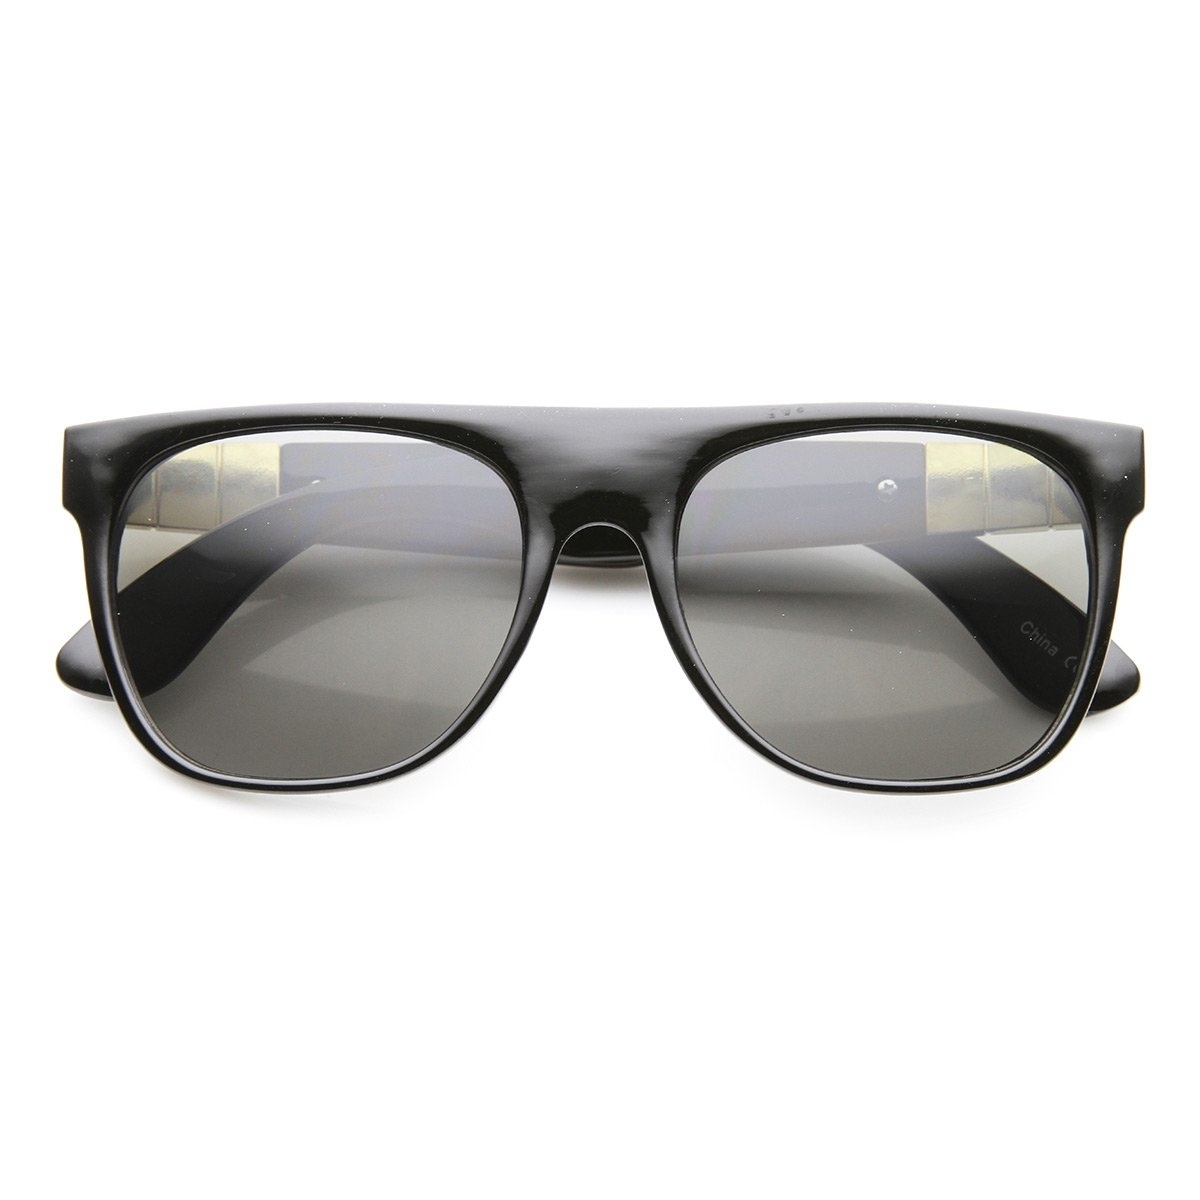 Retro Metal Accent Faux Leather Temple Flat Top Sunglasses - Shiny-Black-Silver Smoke